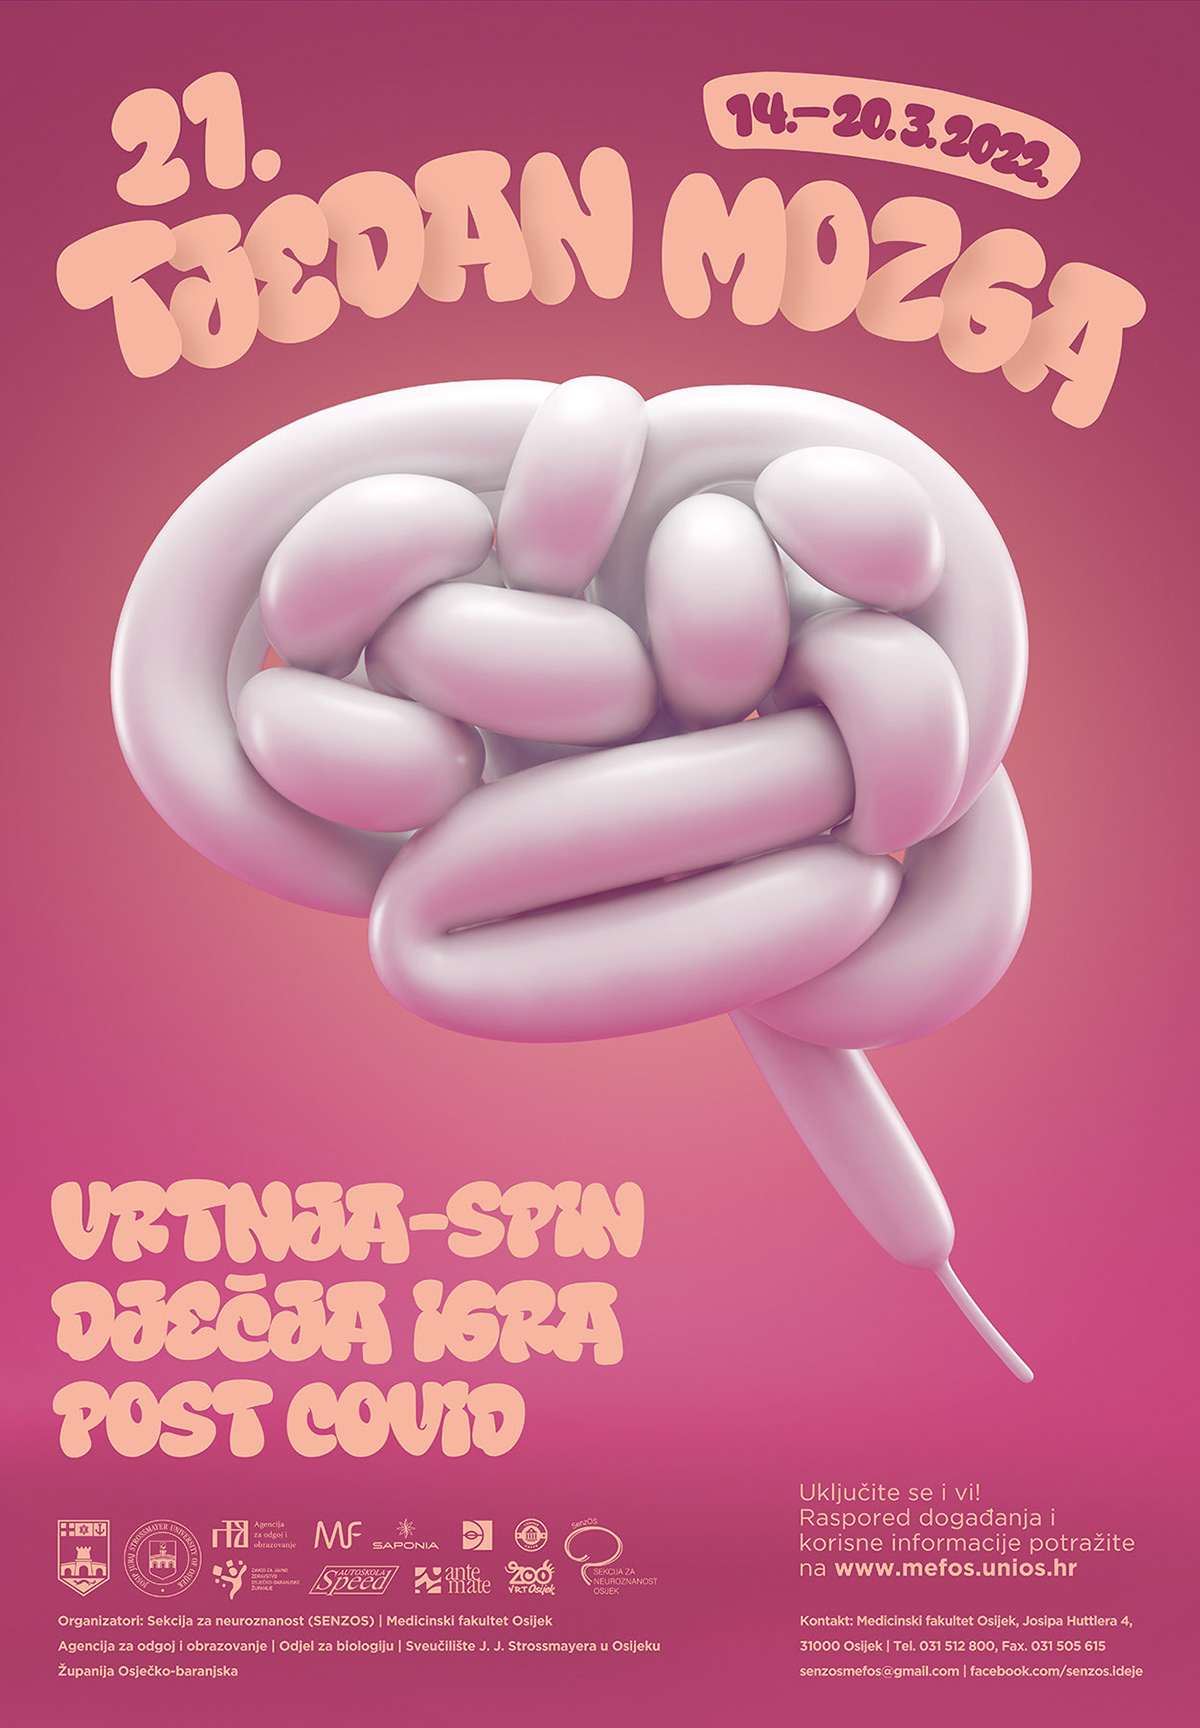 brain science neurology poster CG bulb ILLUSTRATION  illustration design